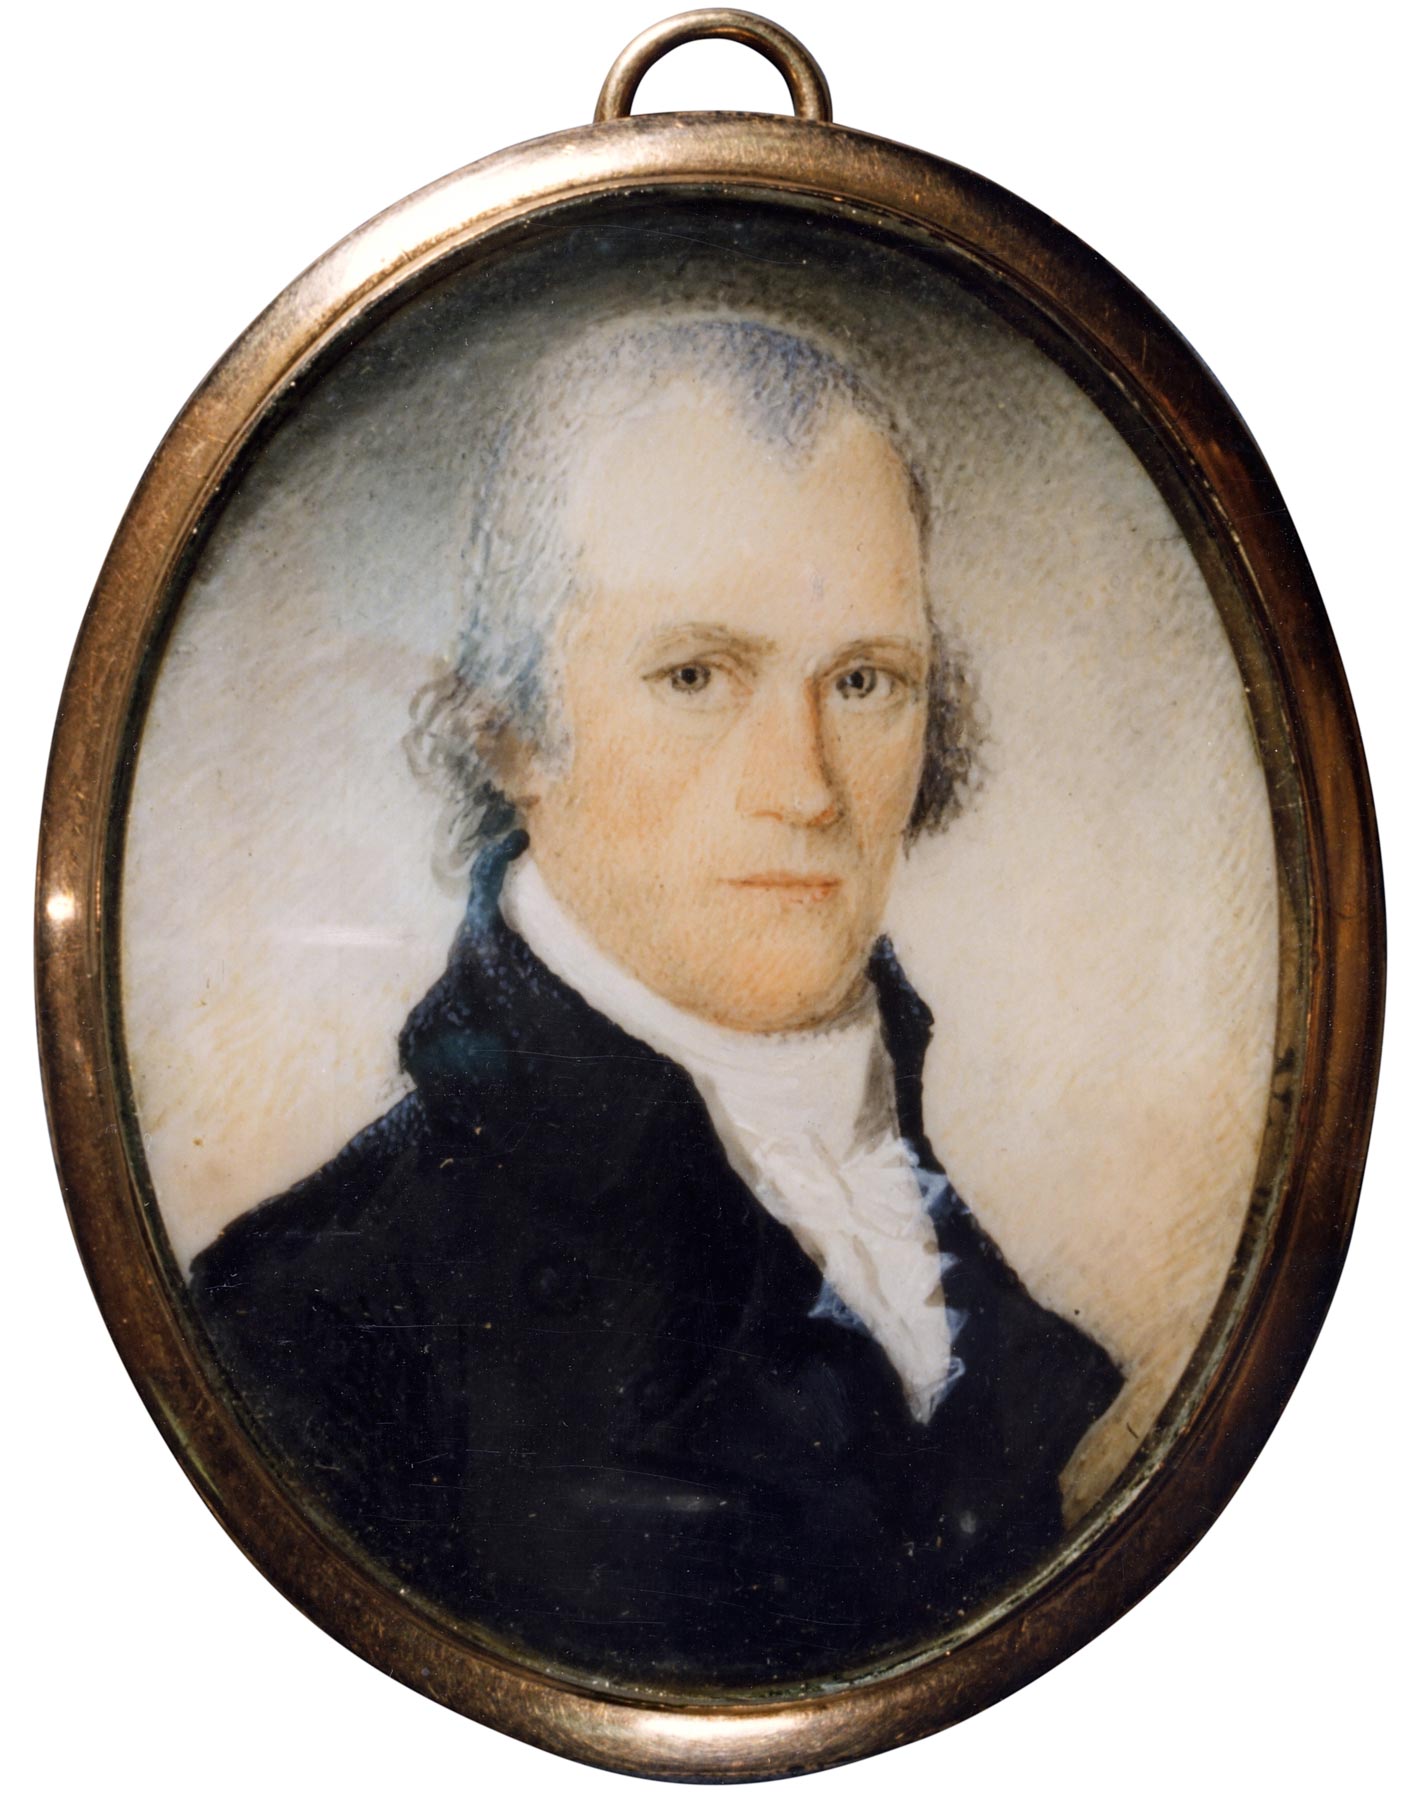 John Quinby, Portland, Maine, c. 1800.